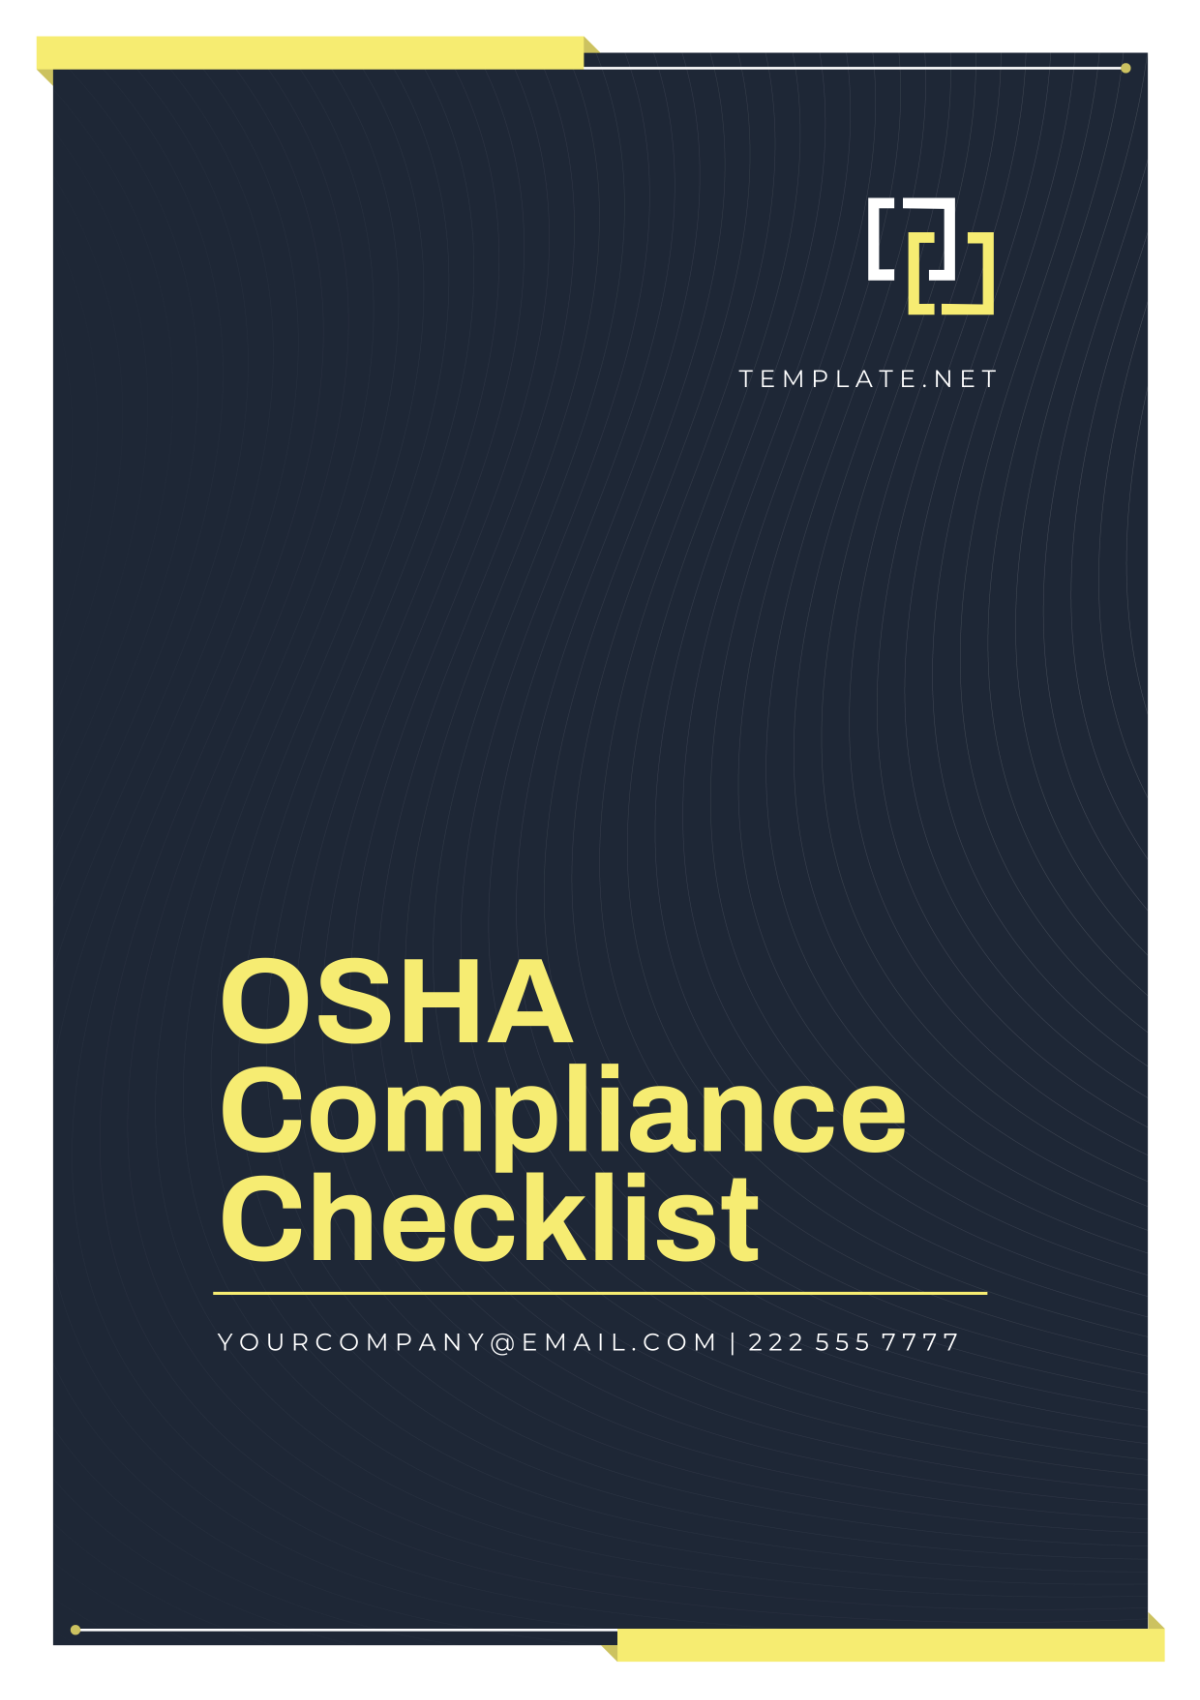 OSHA Compliance Checklist Template